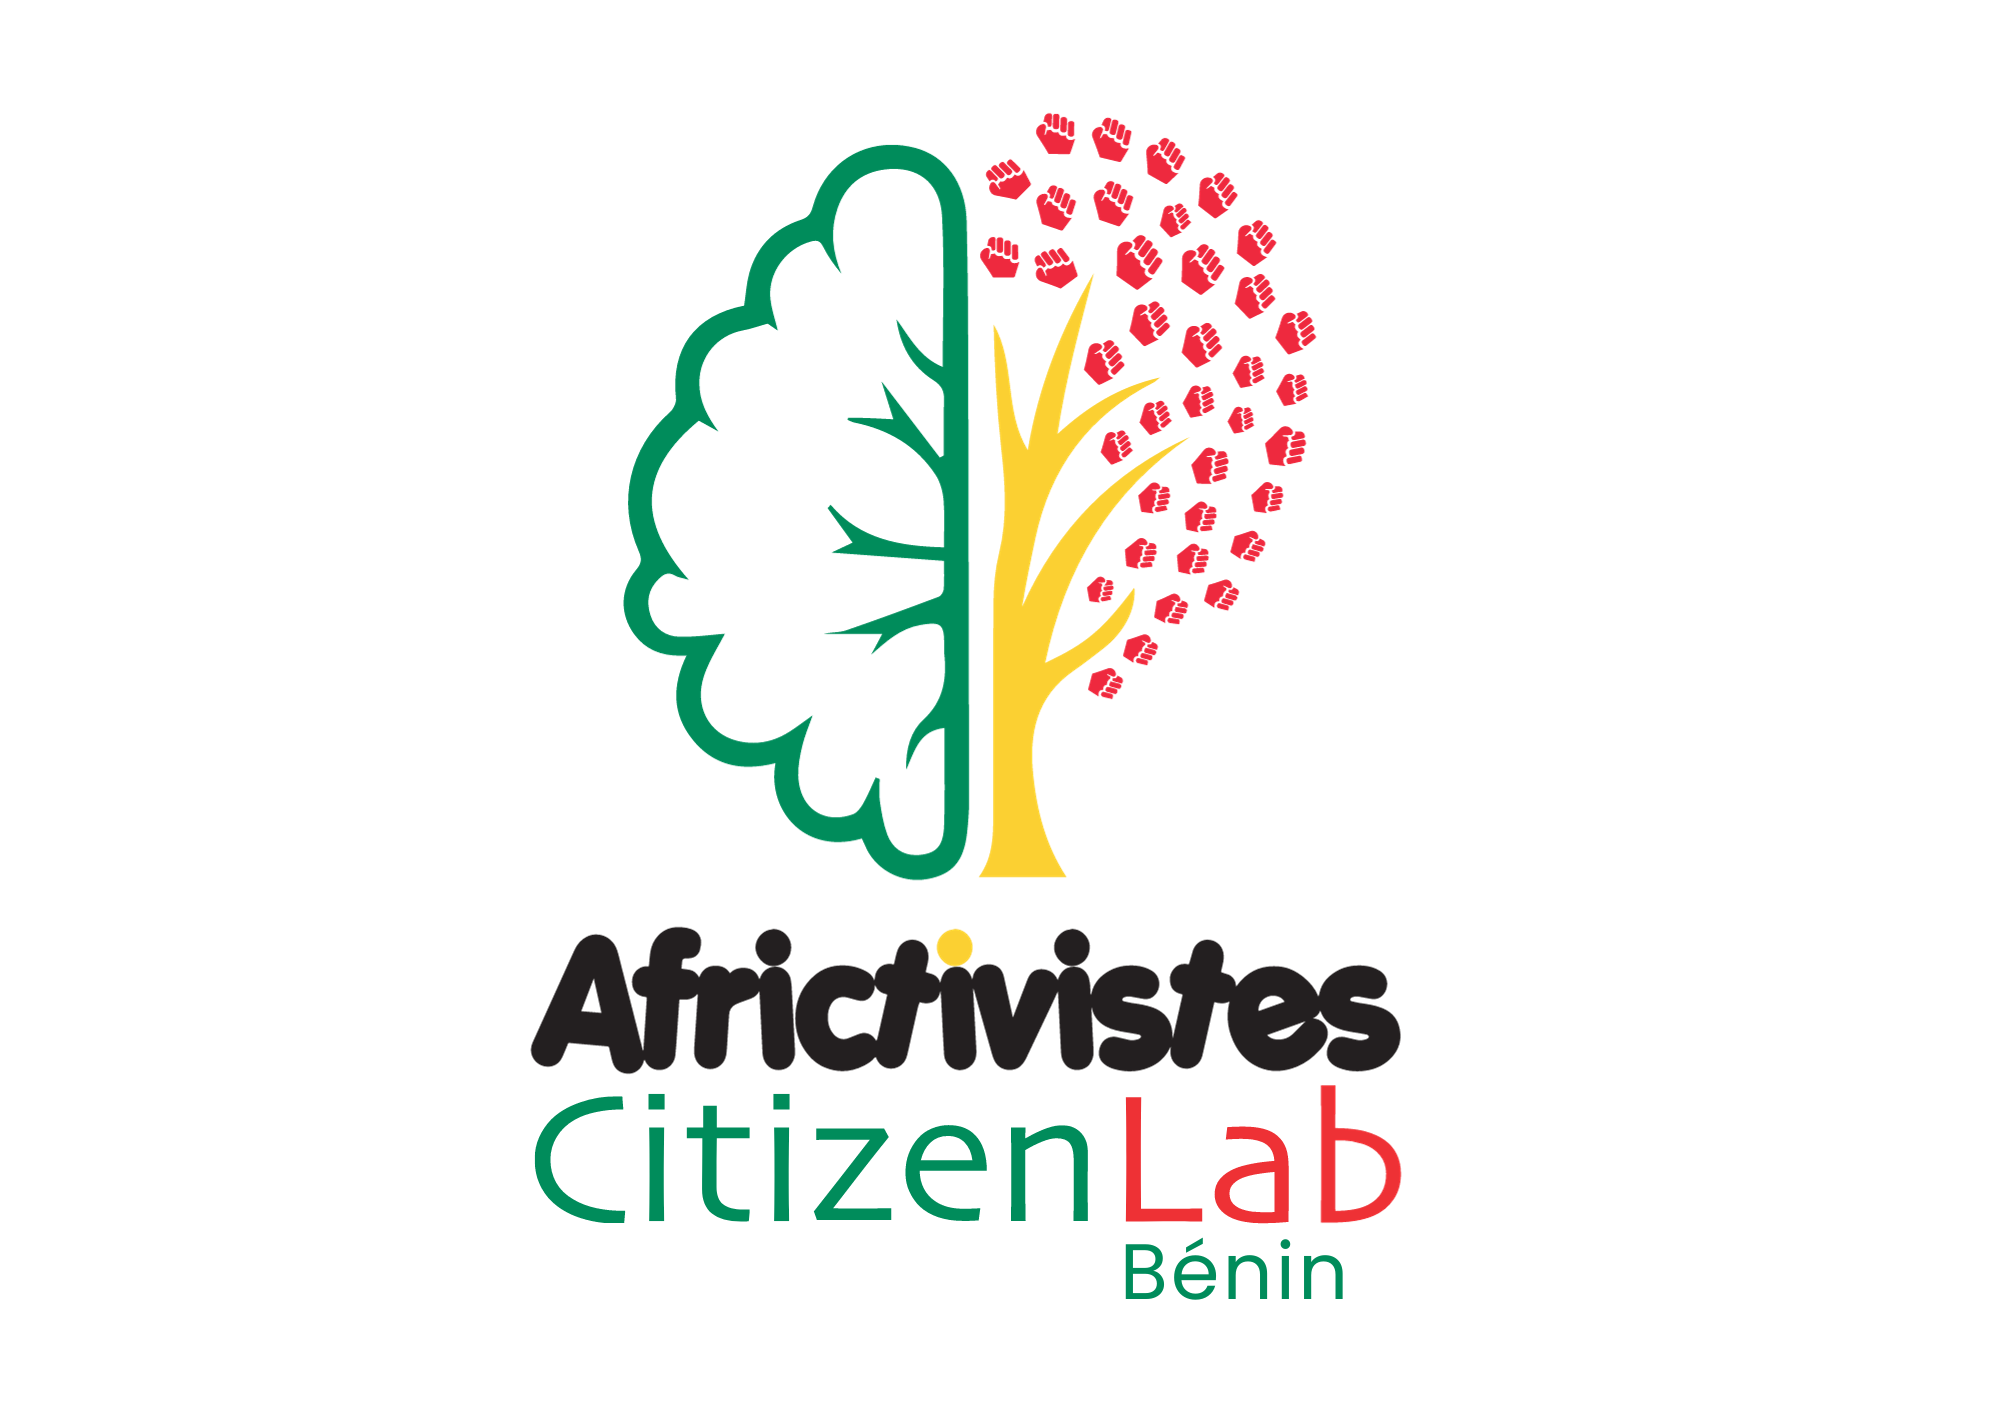 AfricTivistes ouvre un hub d’innovation citoyen au Bénin